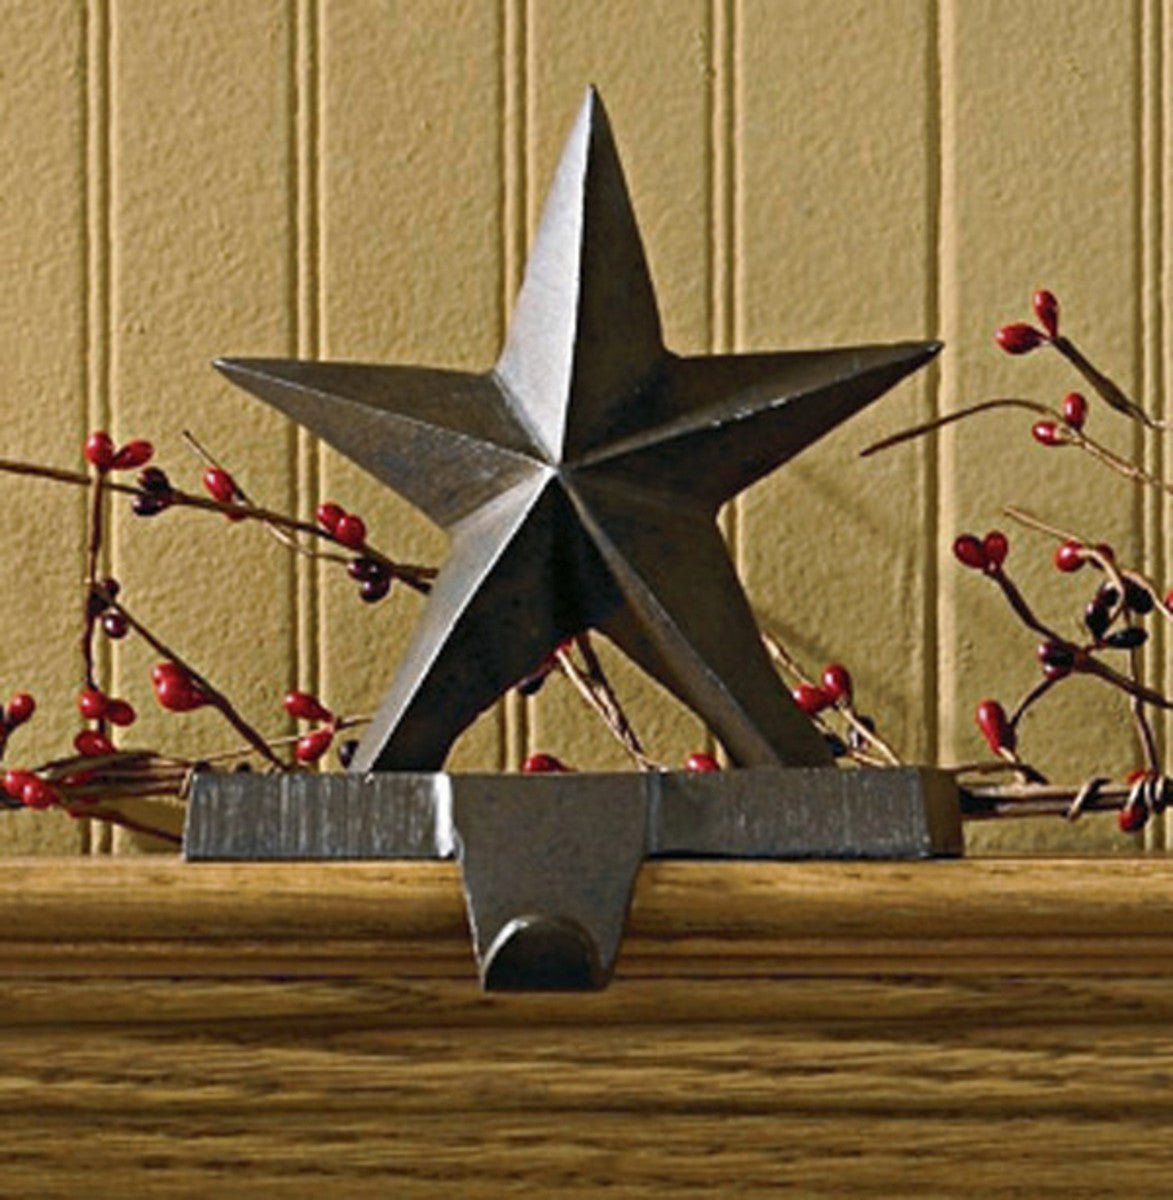 Primitive Christmas Black Iron Star Stocking Holder/ Hanger - The Primitive Pineapple Collection